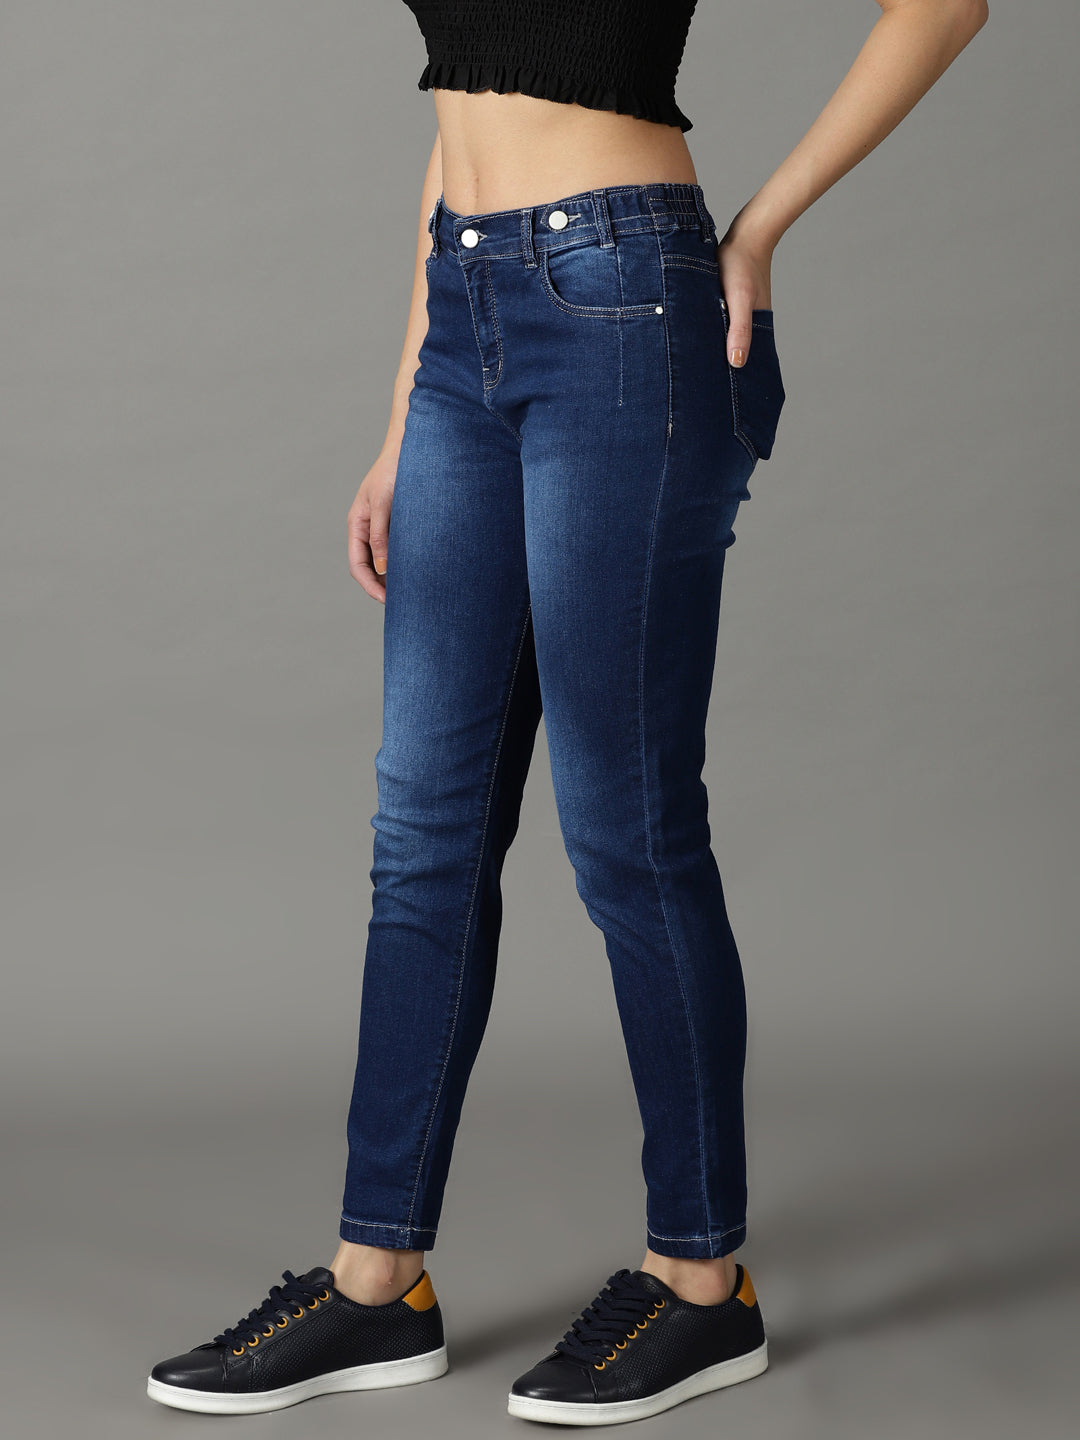 Women's Navy Blue Solid Mom Fit Denim Jeans